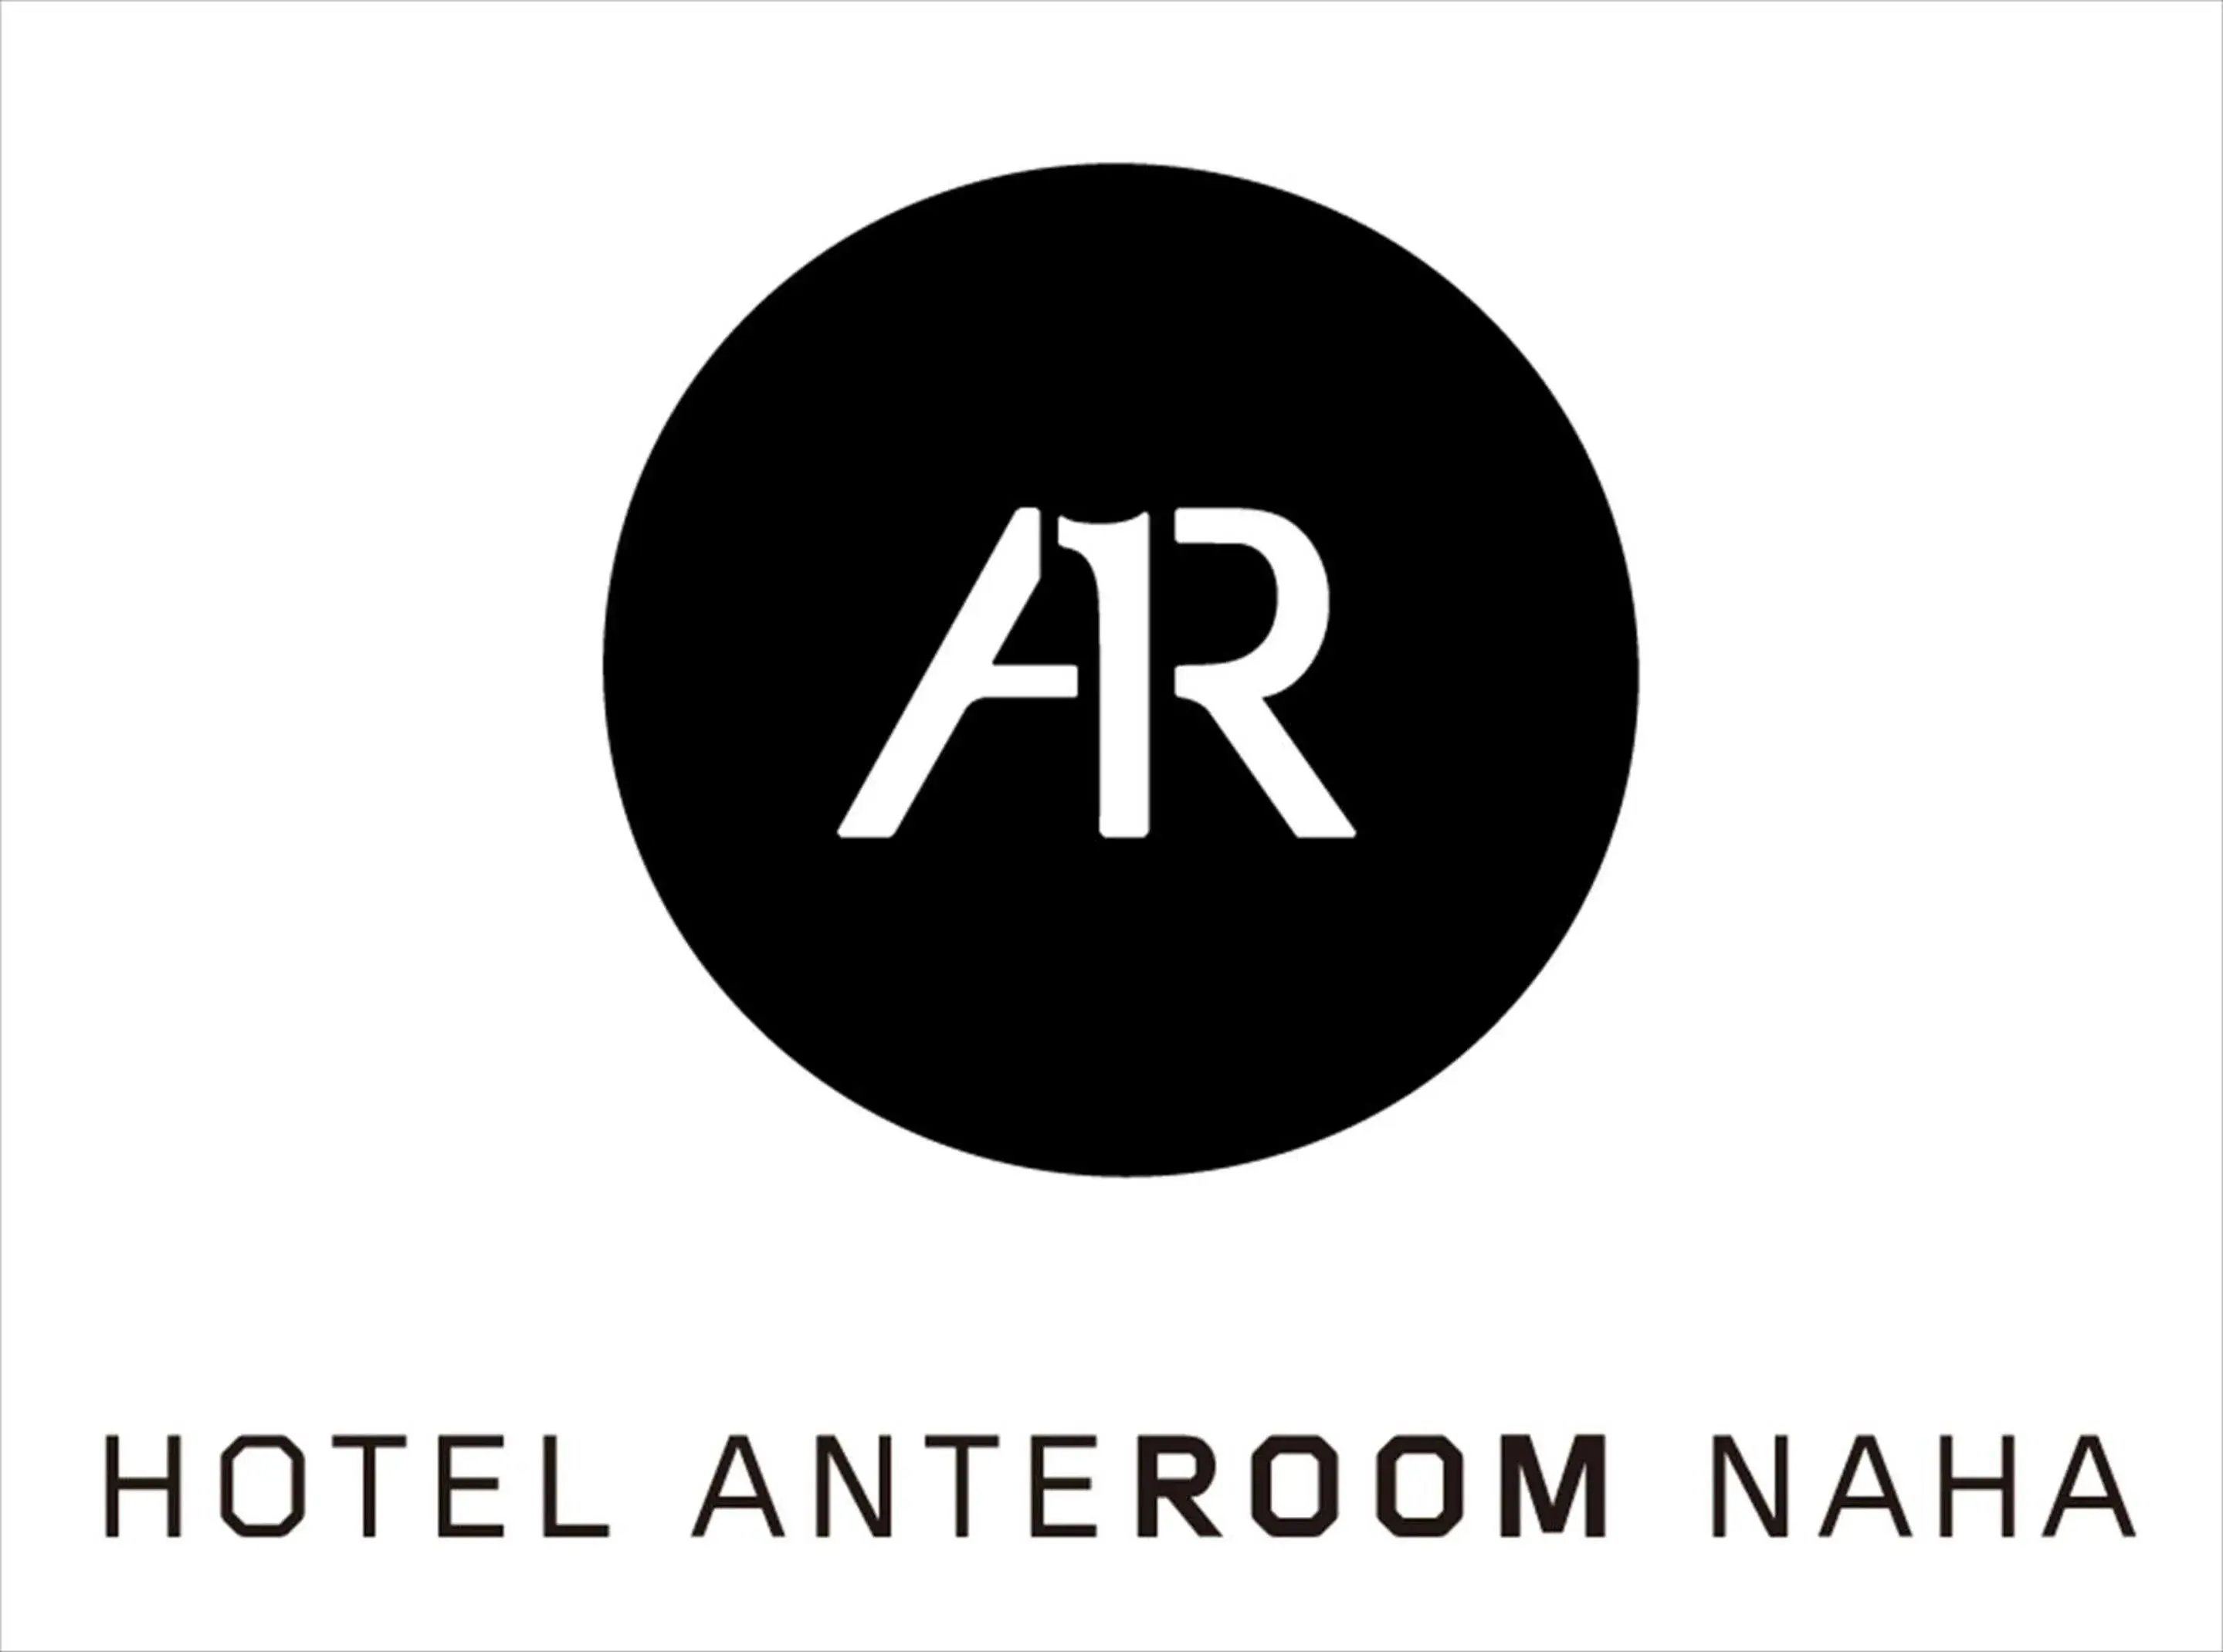 Property logo or sign in HOTEL ANTEROOM NAHA